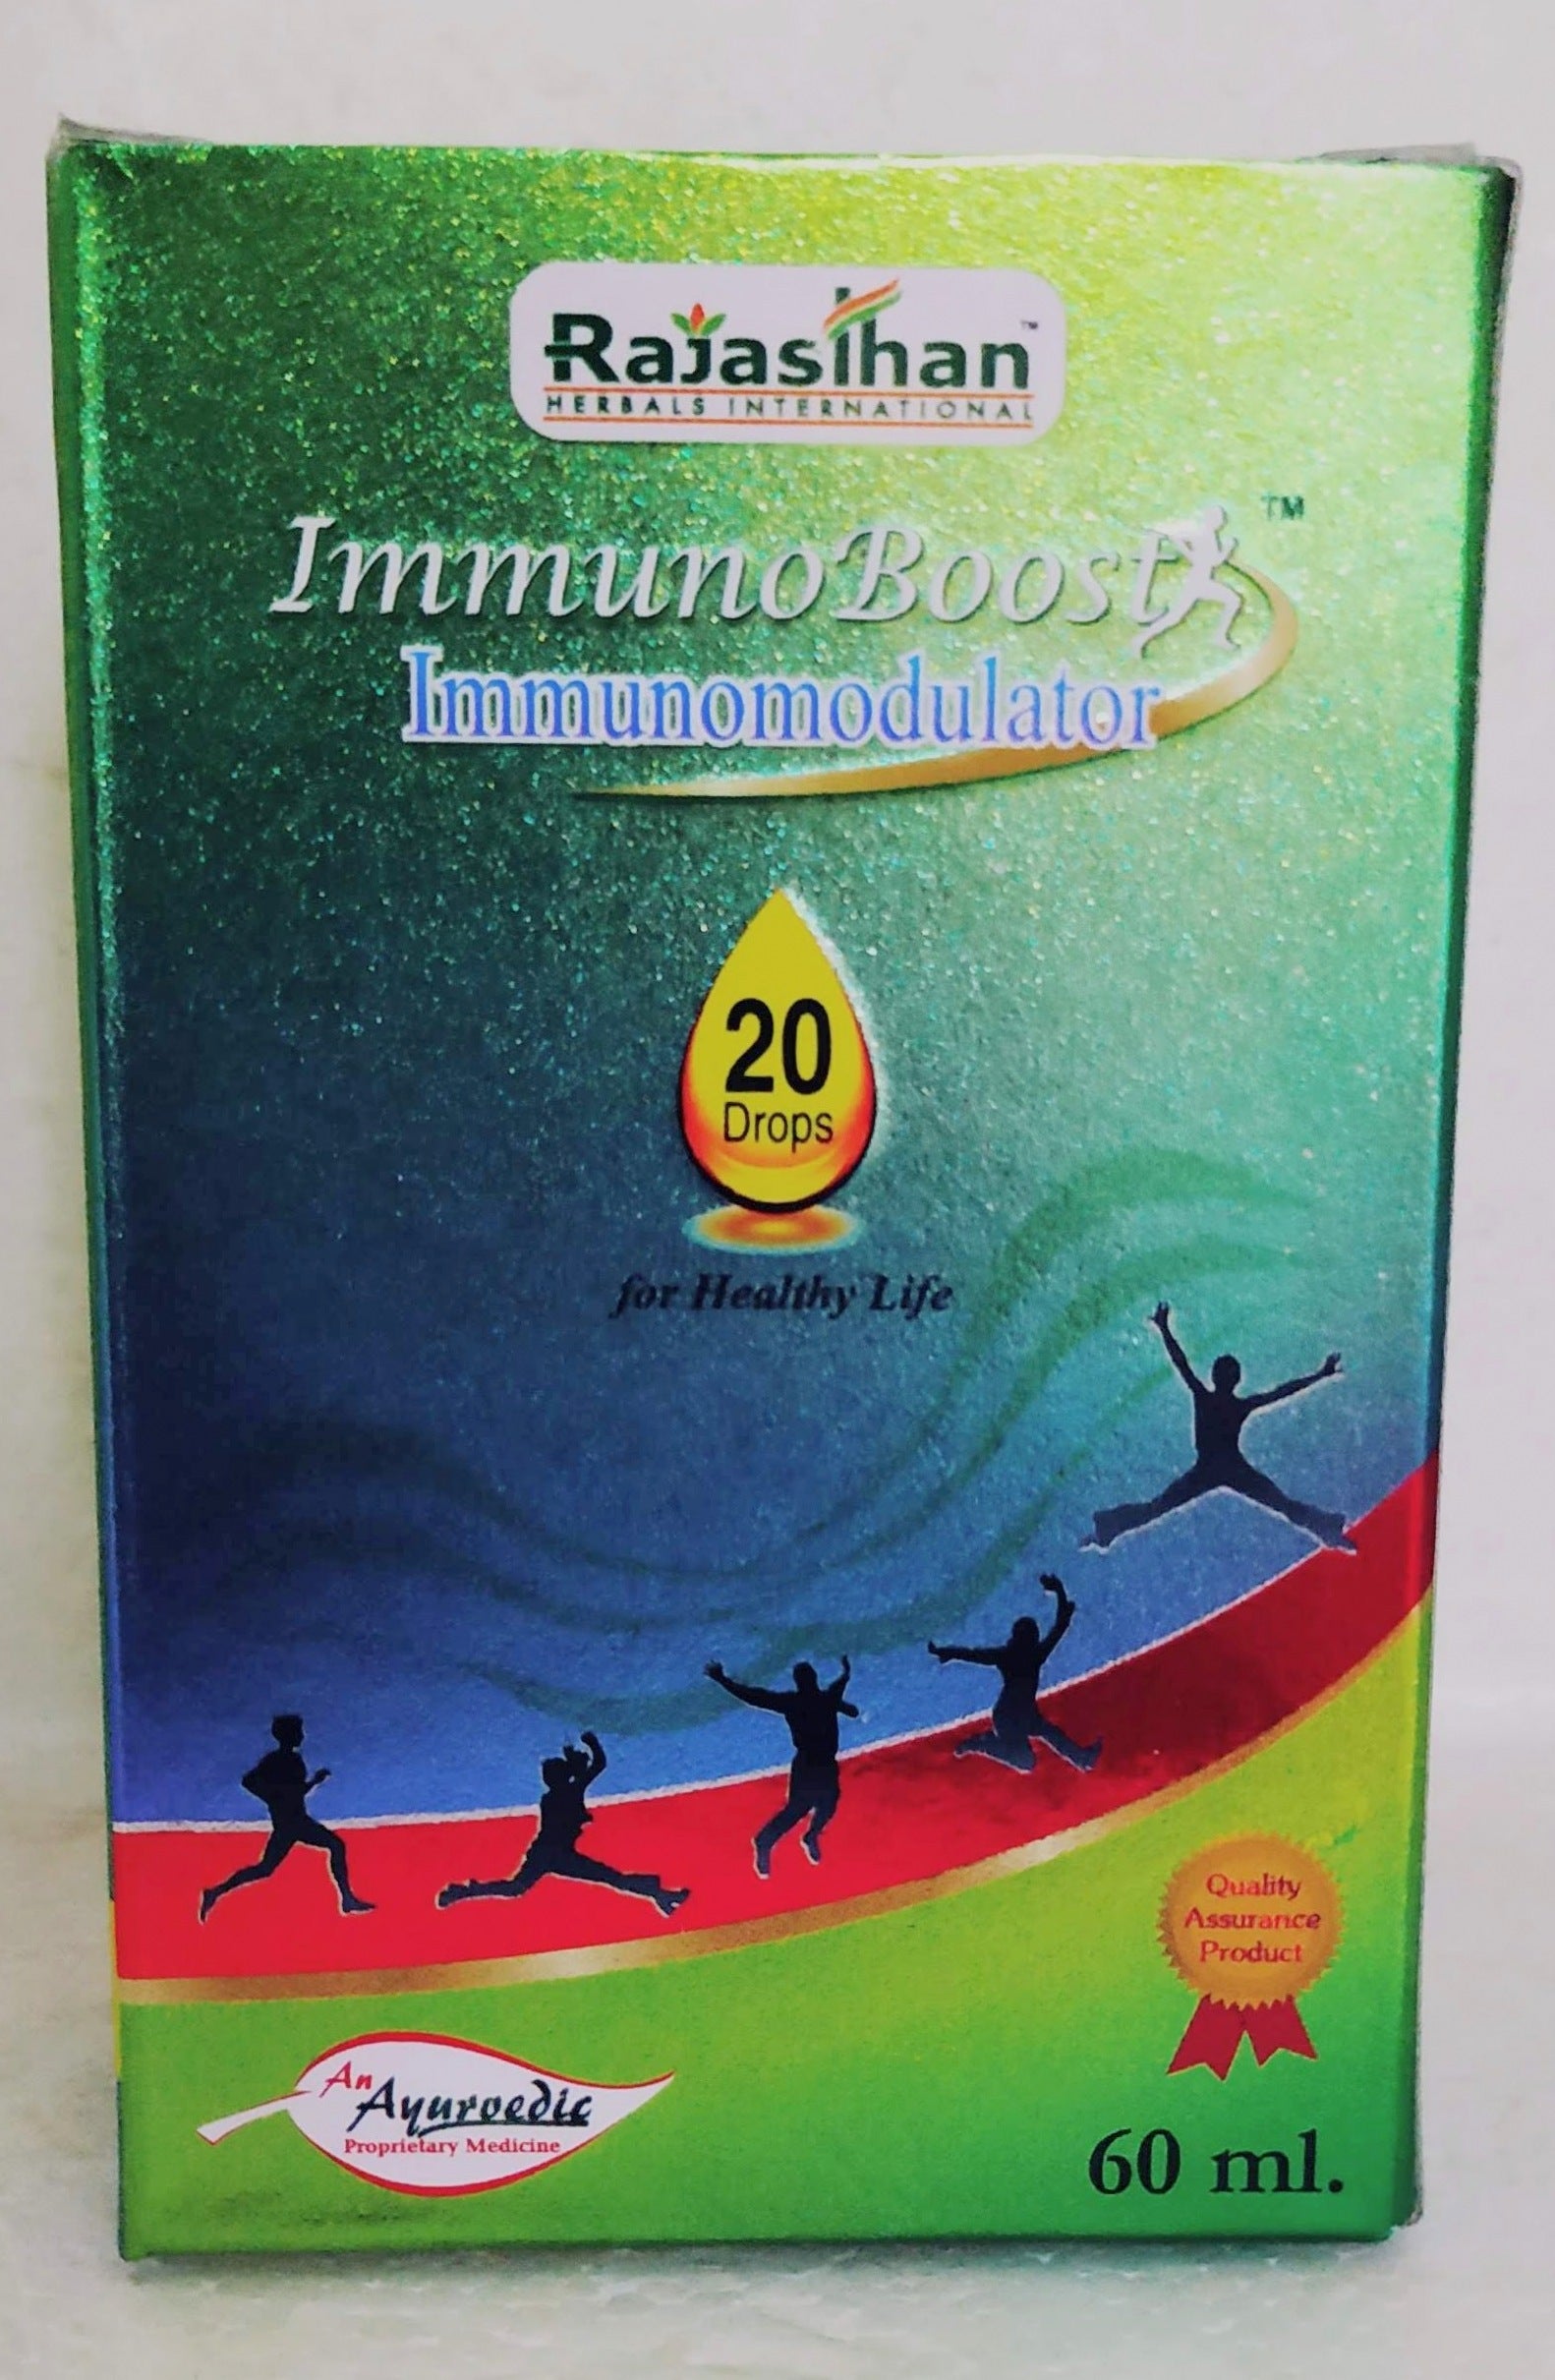 Immunoboost Immunomodulator drops 60ml -  Rajasthan Herbals - Medizzo.com